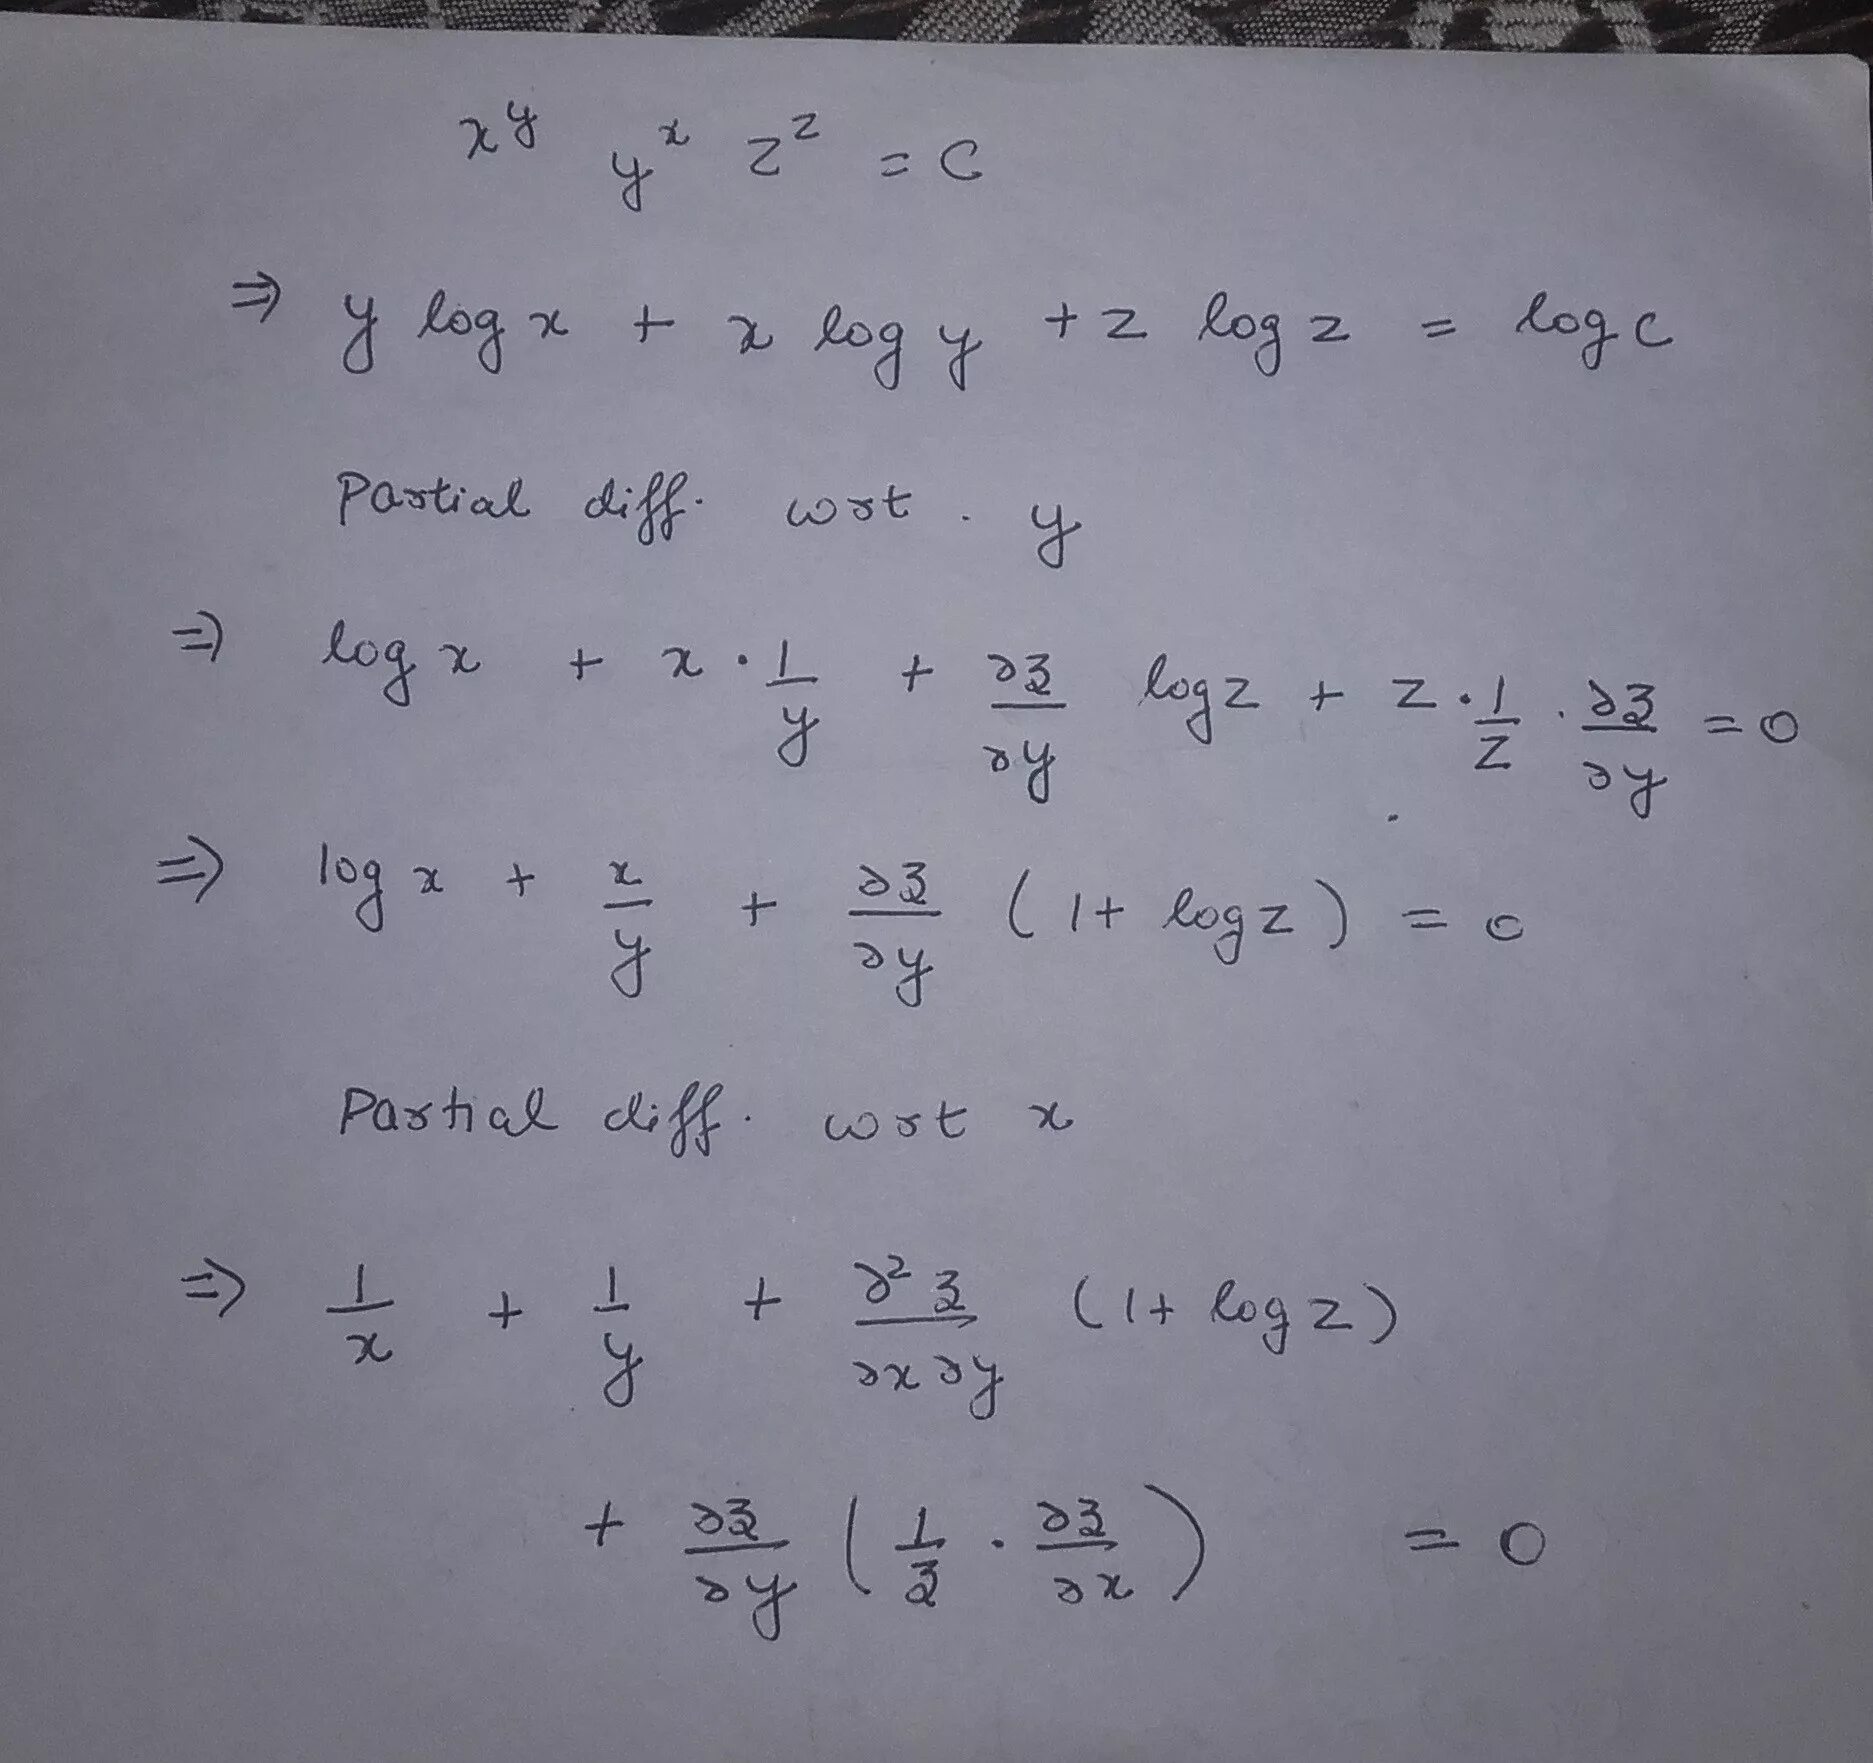 X 13 y 3 z x. (X-Y)(X+Y) формула. (X+Y+Z)^2 формула. X^2+Y^2=Z^2. Y>Z+X решение.